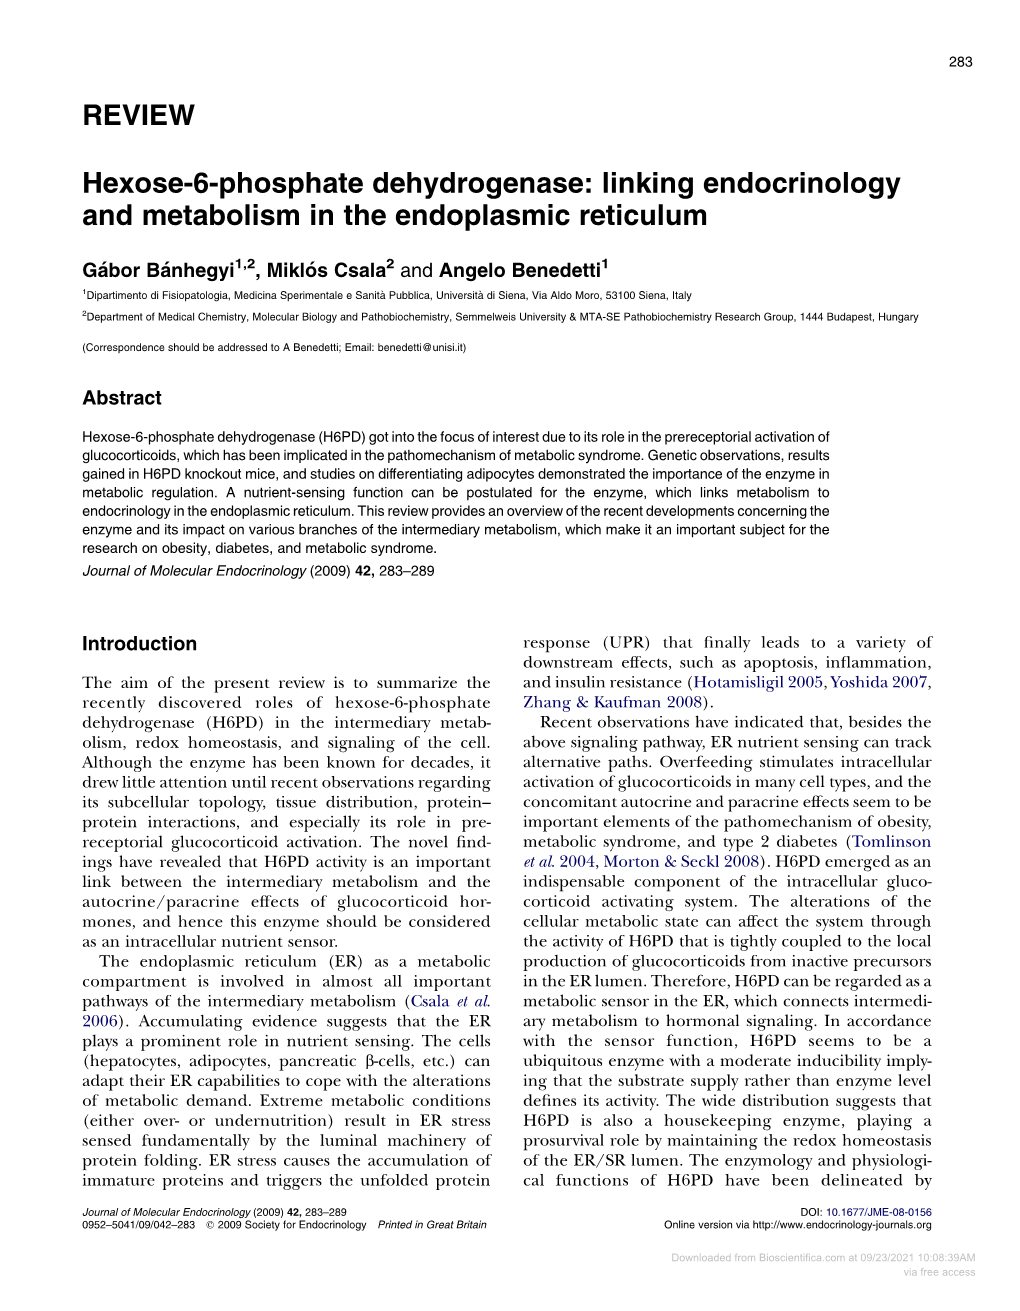 REVIEW Hexose-6-Phosphate Dehydrogenase: Linking